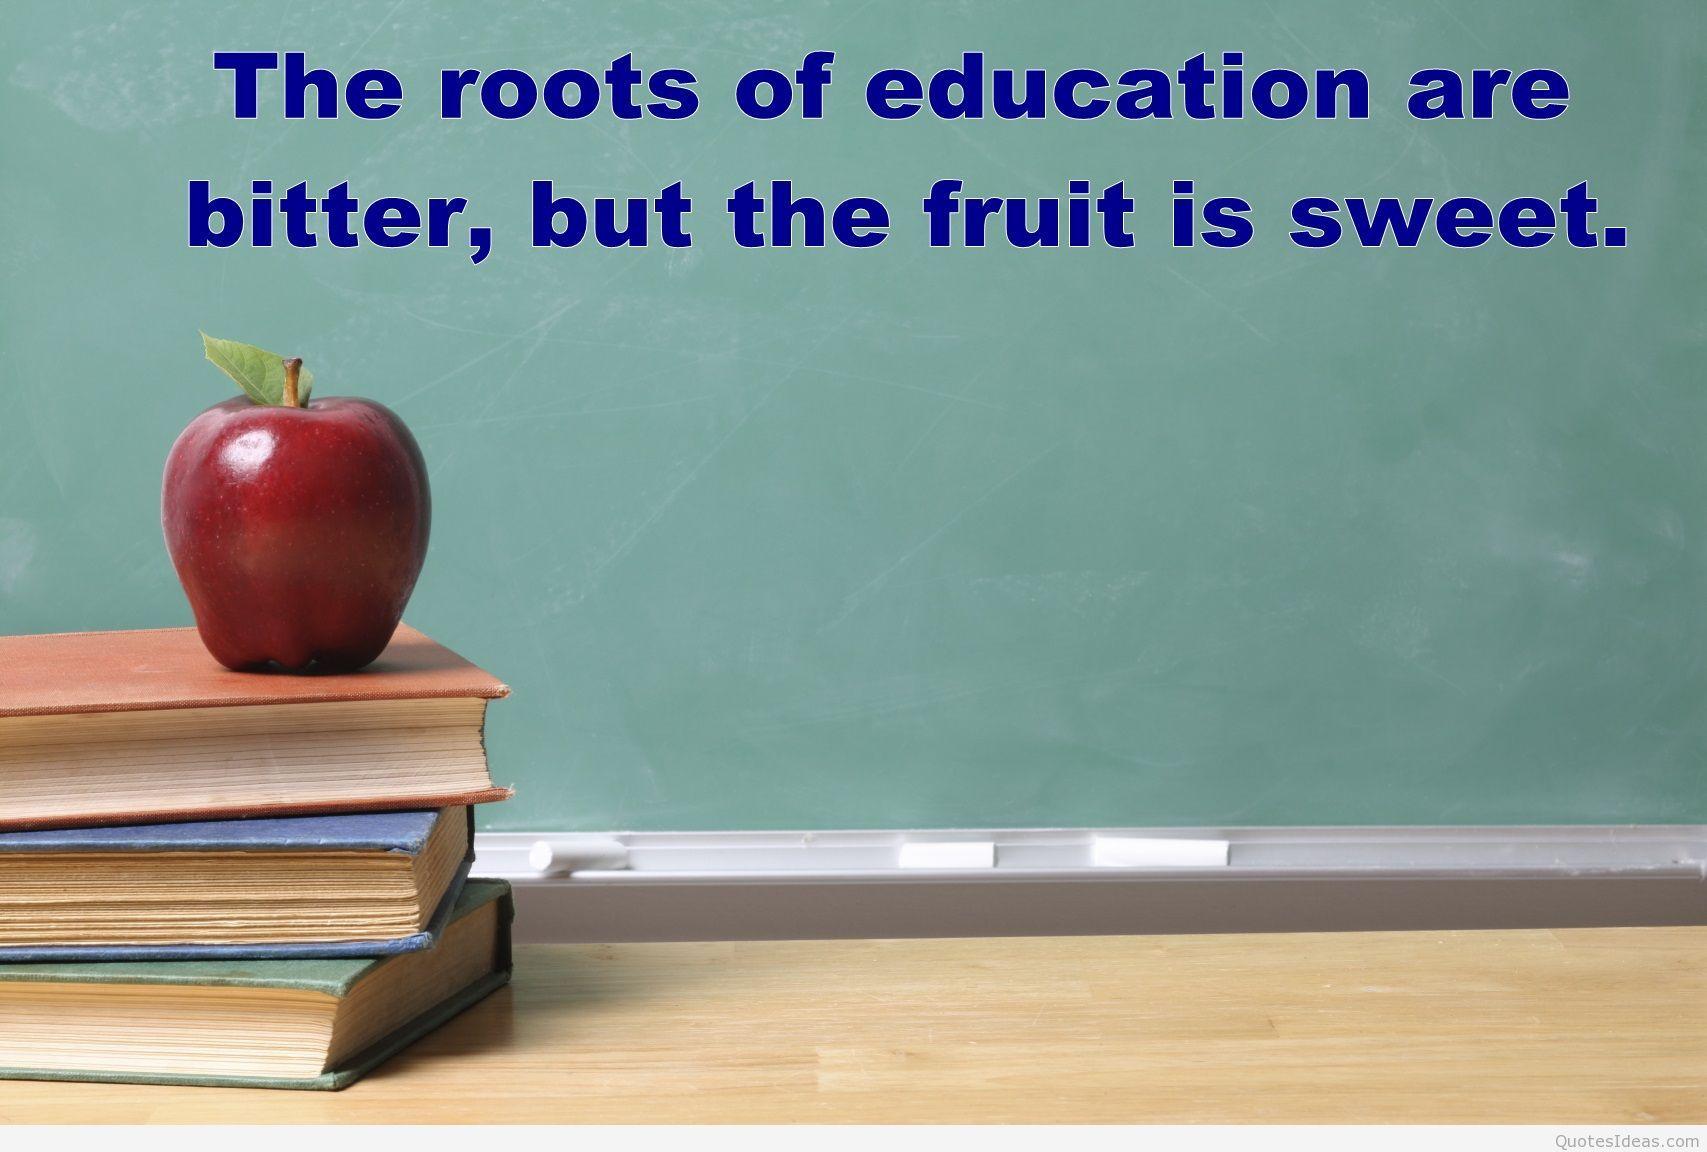 Amazing education quote wallpaper